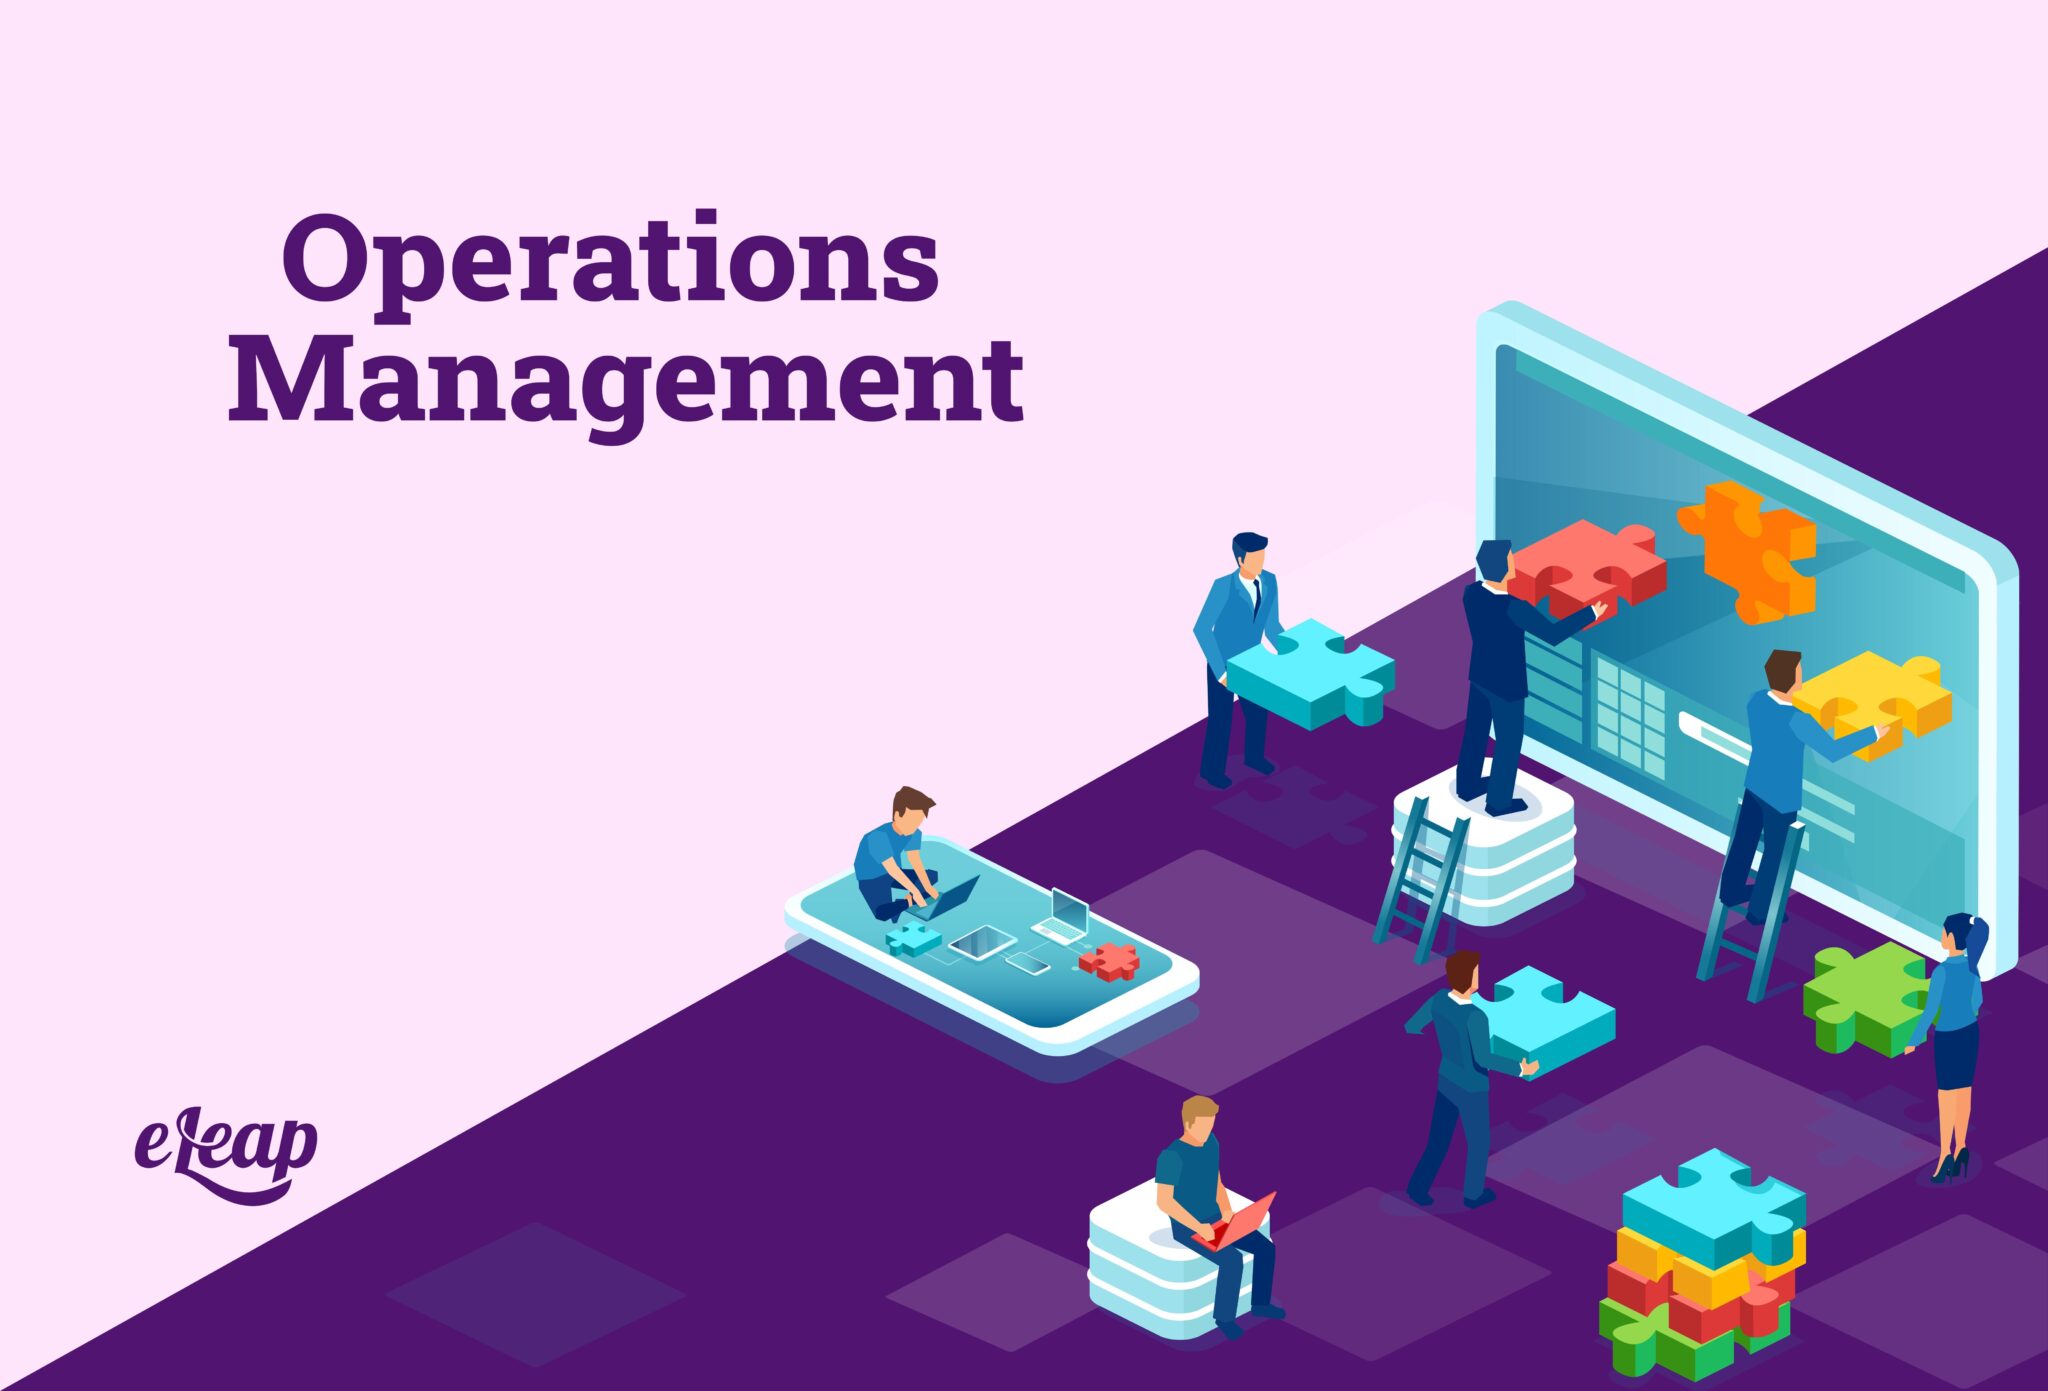 Defining Optimal Operations Management